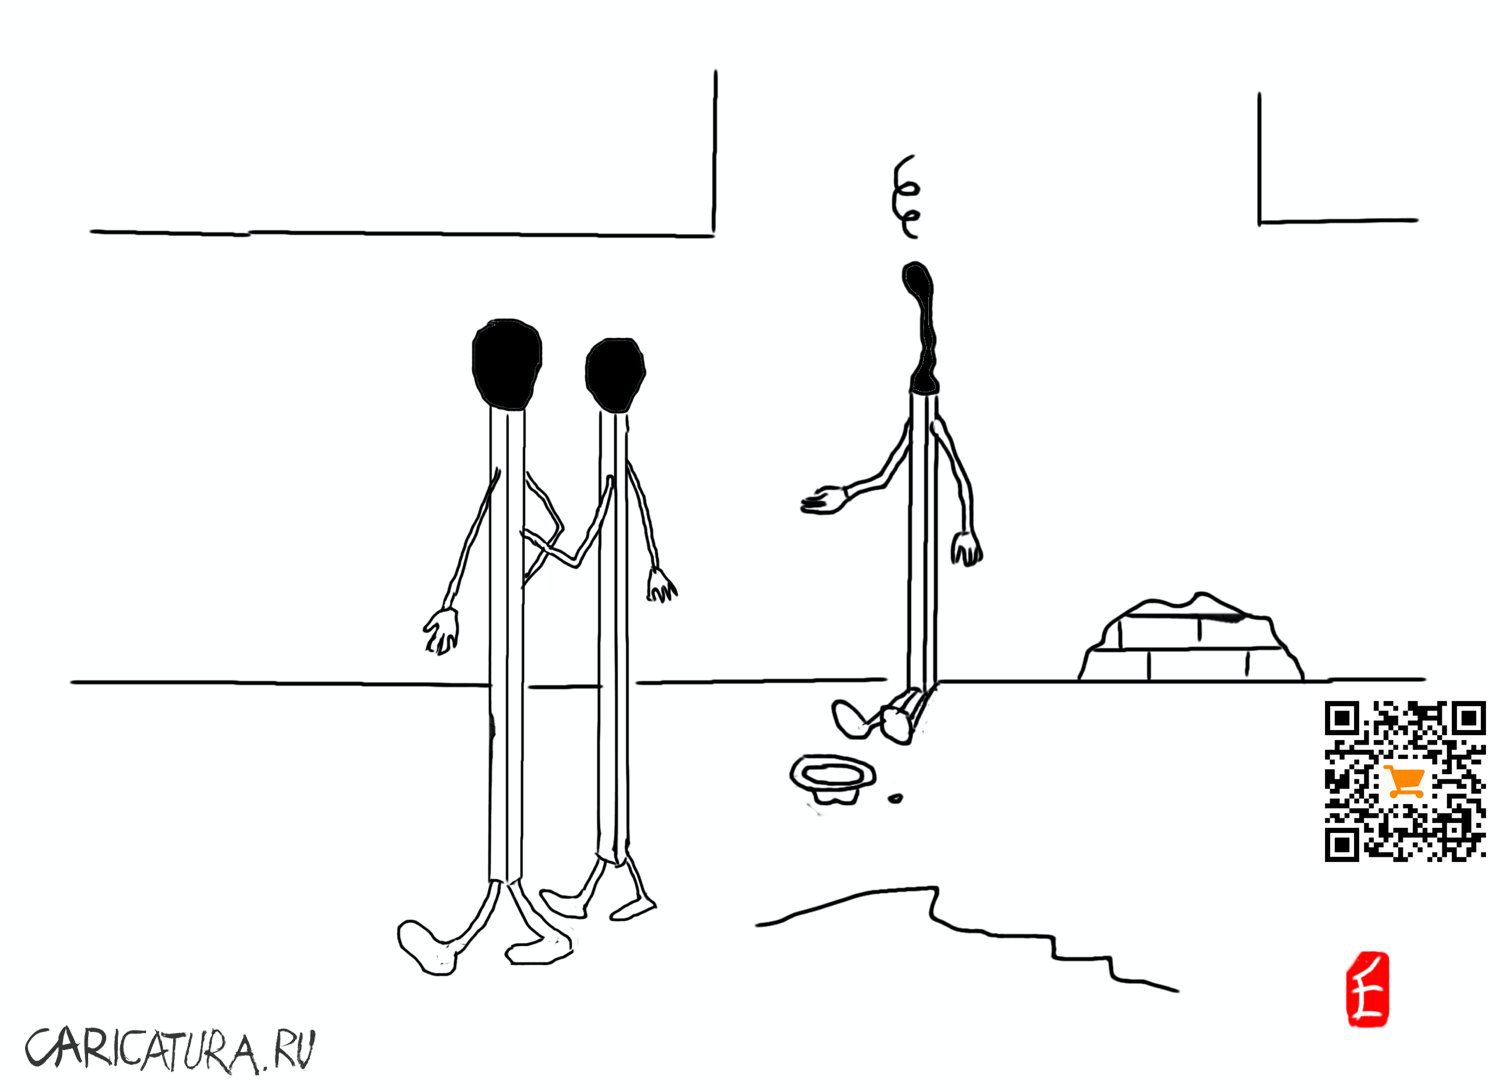 Карикатура "Из жизни спичек", Евгений Лапин